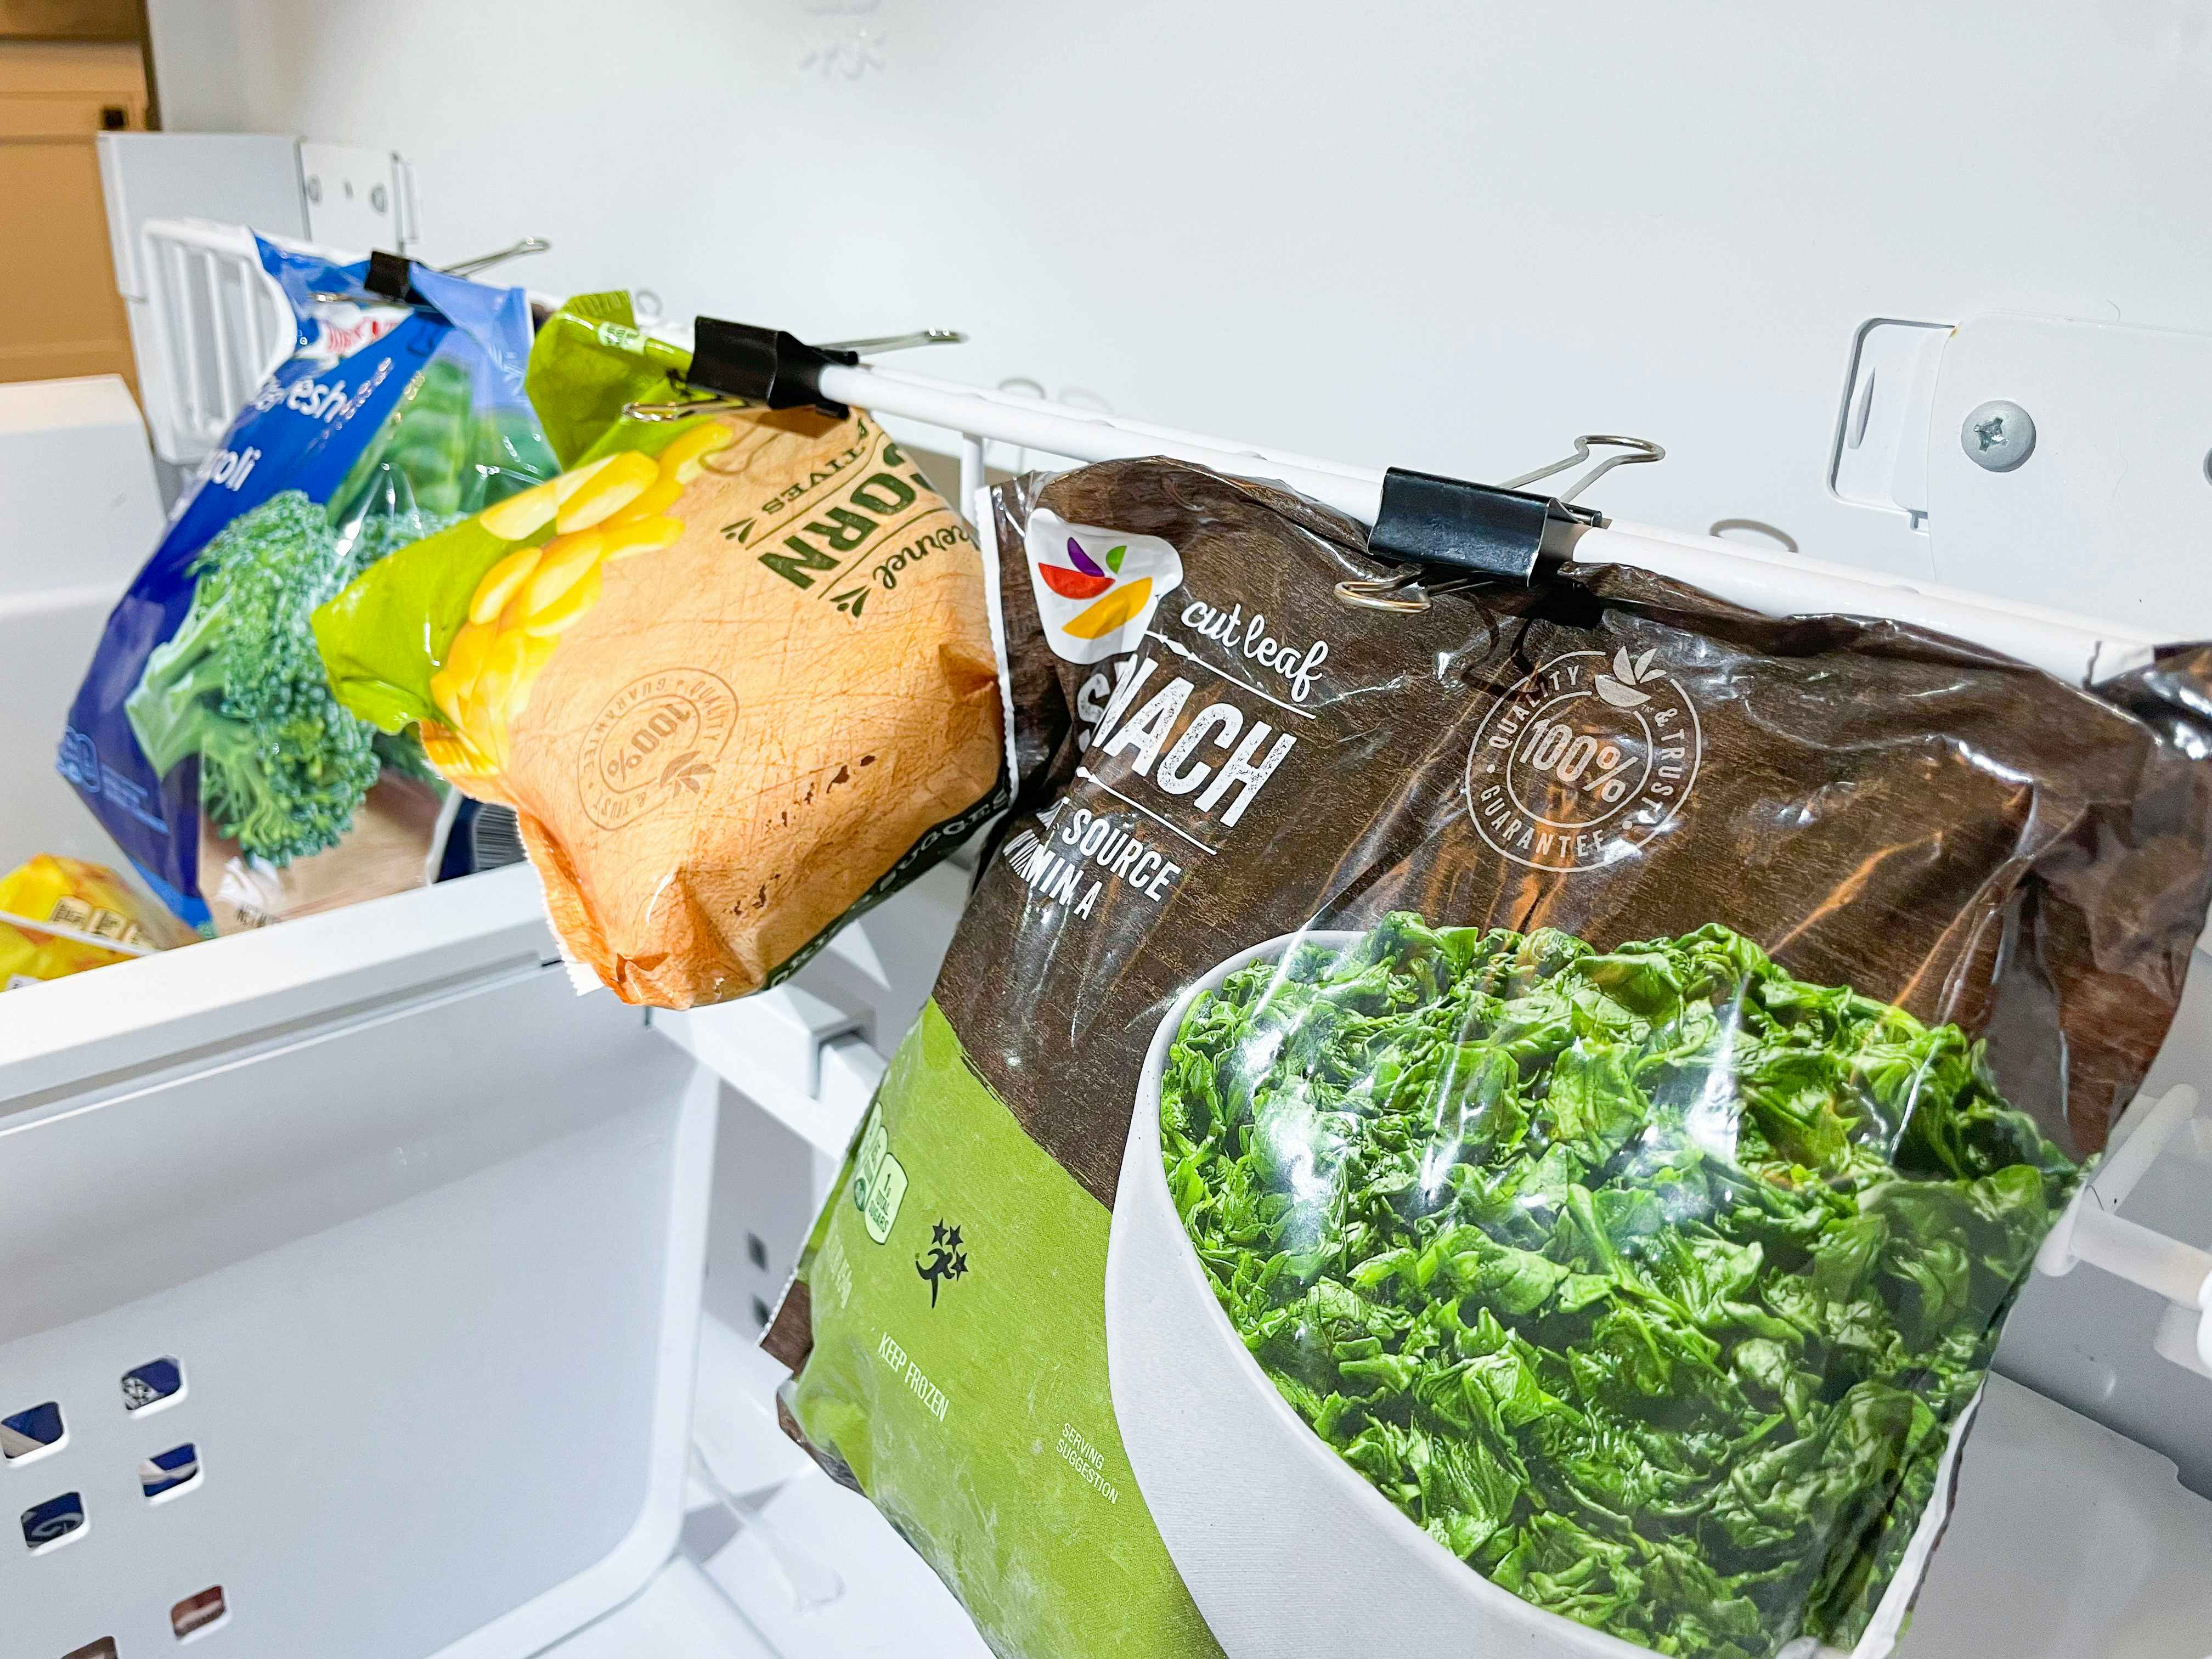 binder clip organization hack showing frozen veggies hanging from binder clips in freezer